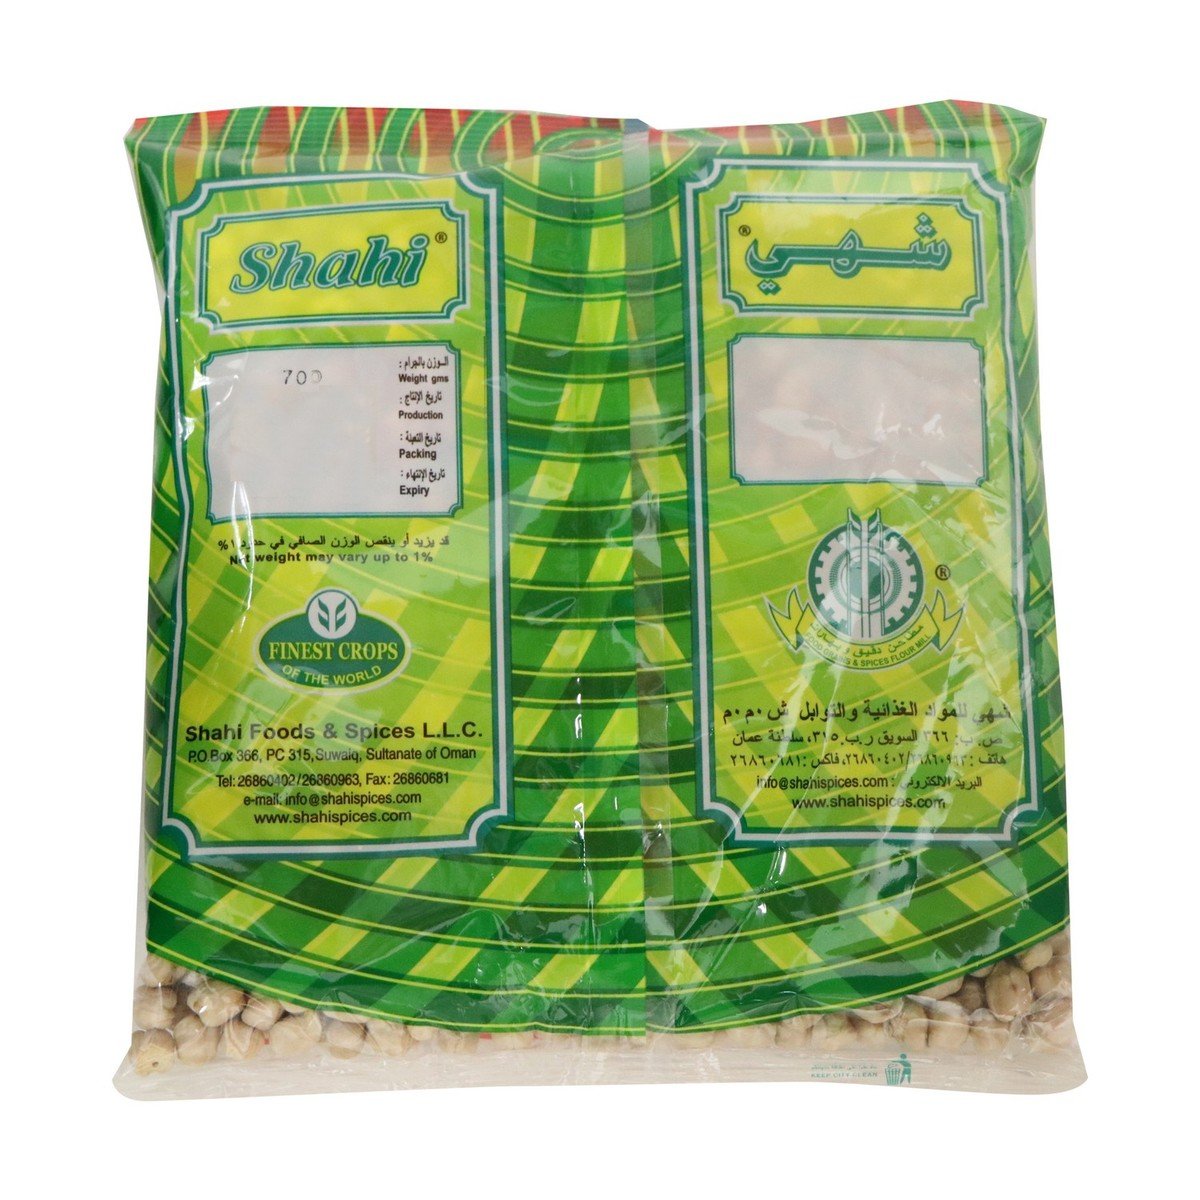 Shahi White Chick Peas 700g